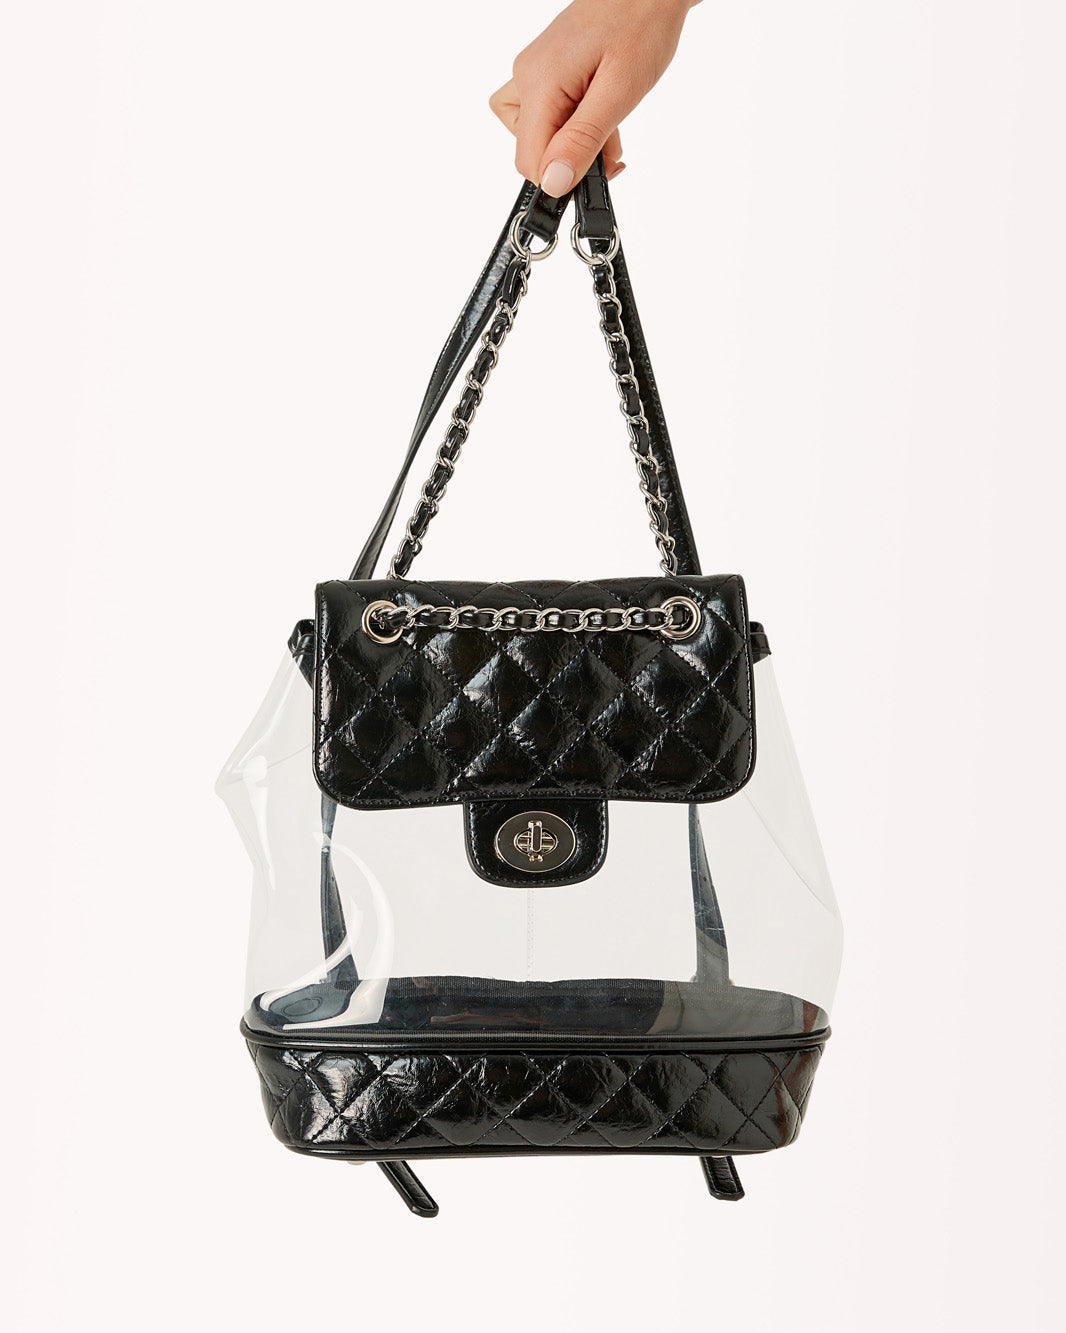 CASSIE BACKPACK - BLACK-CLEAR-Handbags-Billini-O/S-BILLINI USA